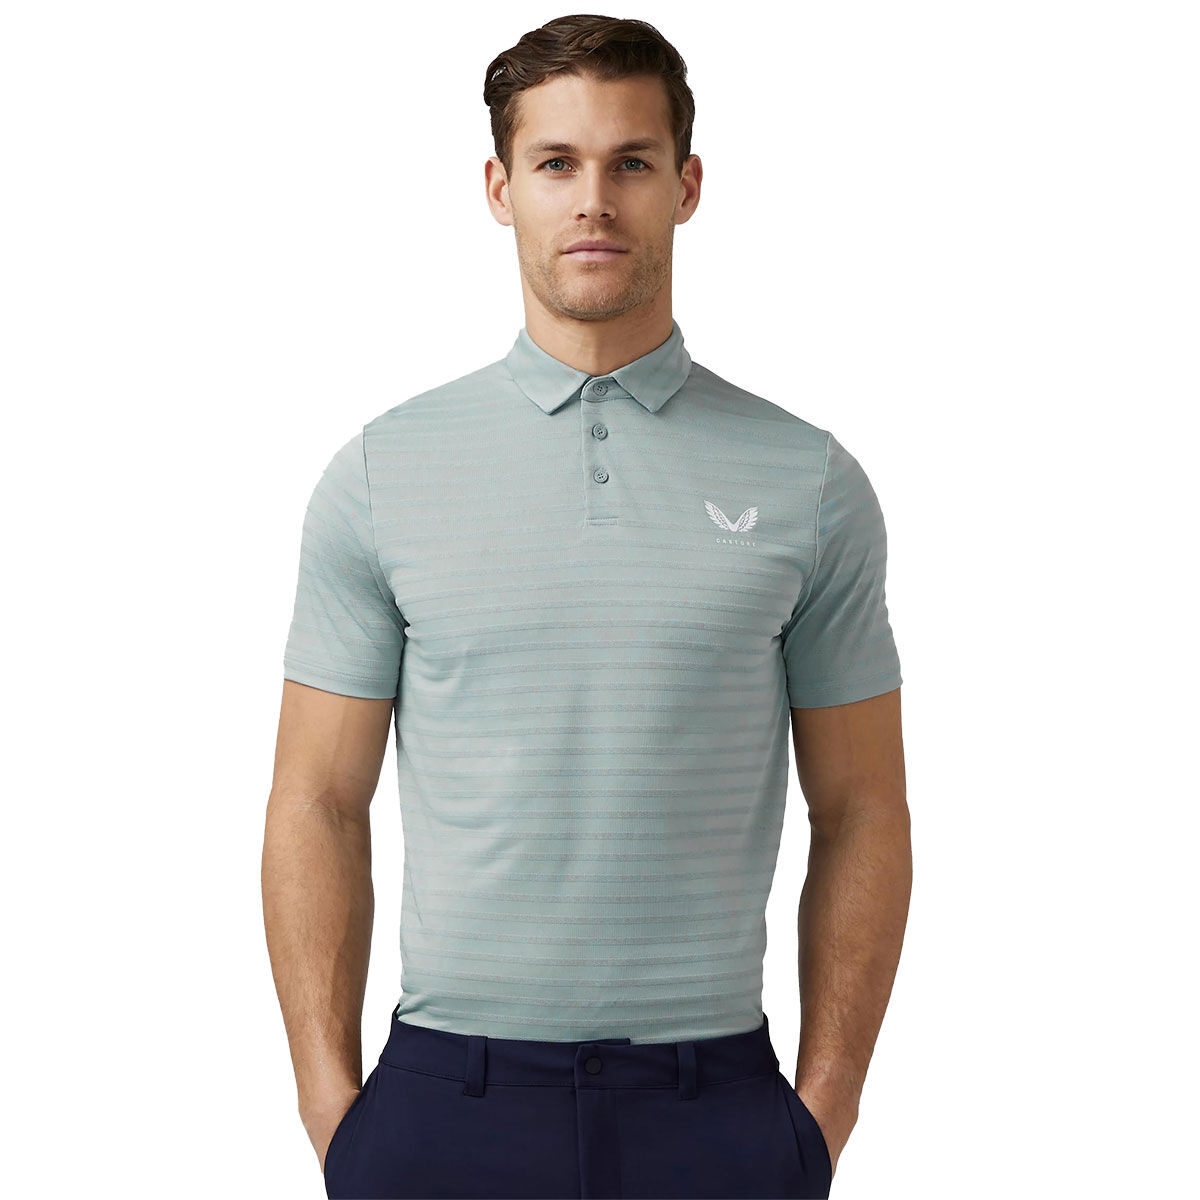 Castore Men’s Textured Pique Golf Polo Shirt, Mens, Stone blue, Medium | American Golf